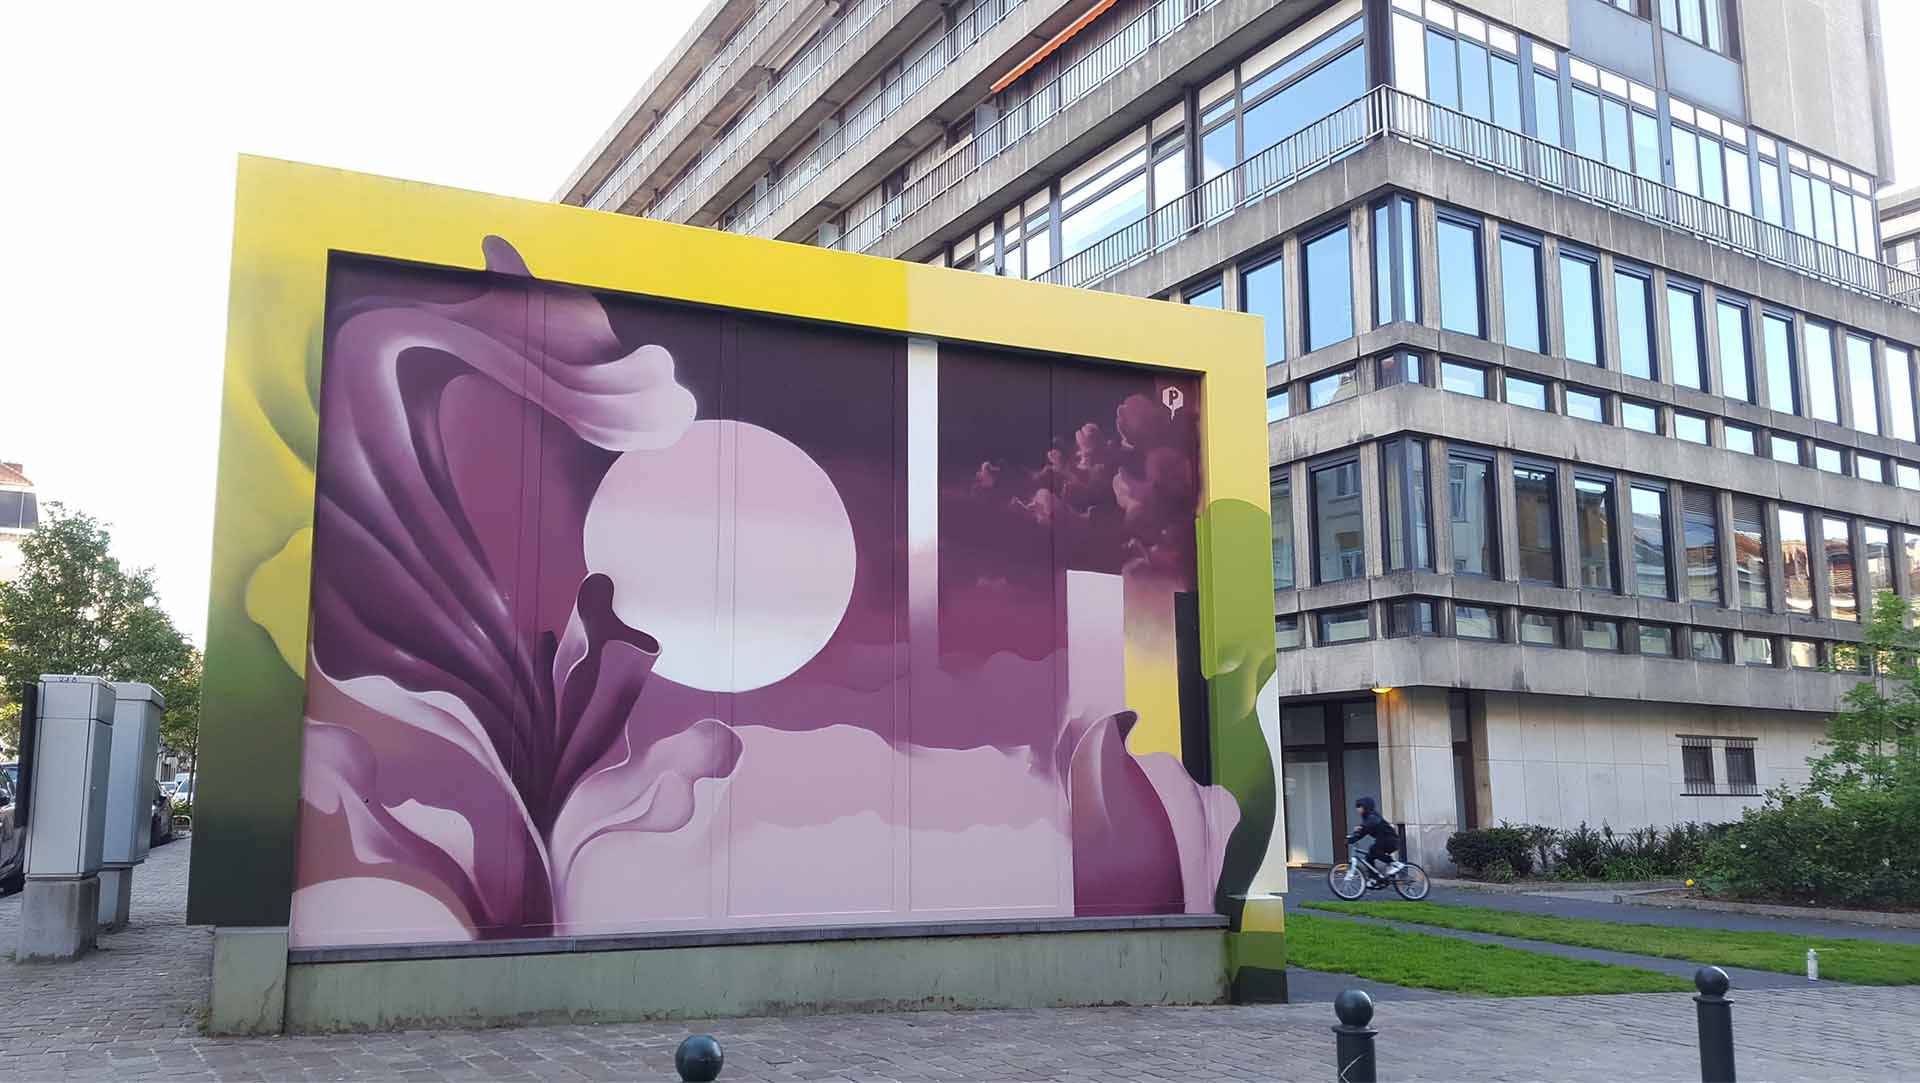 https://www.propaganza.be/wp-content/uploads/2019/05/Propaganza-ixelles-bruxelles-graffiti-workshop-street-art-tulipe-2.jpg